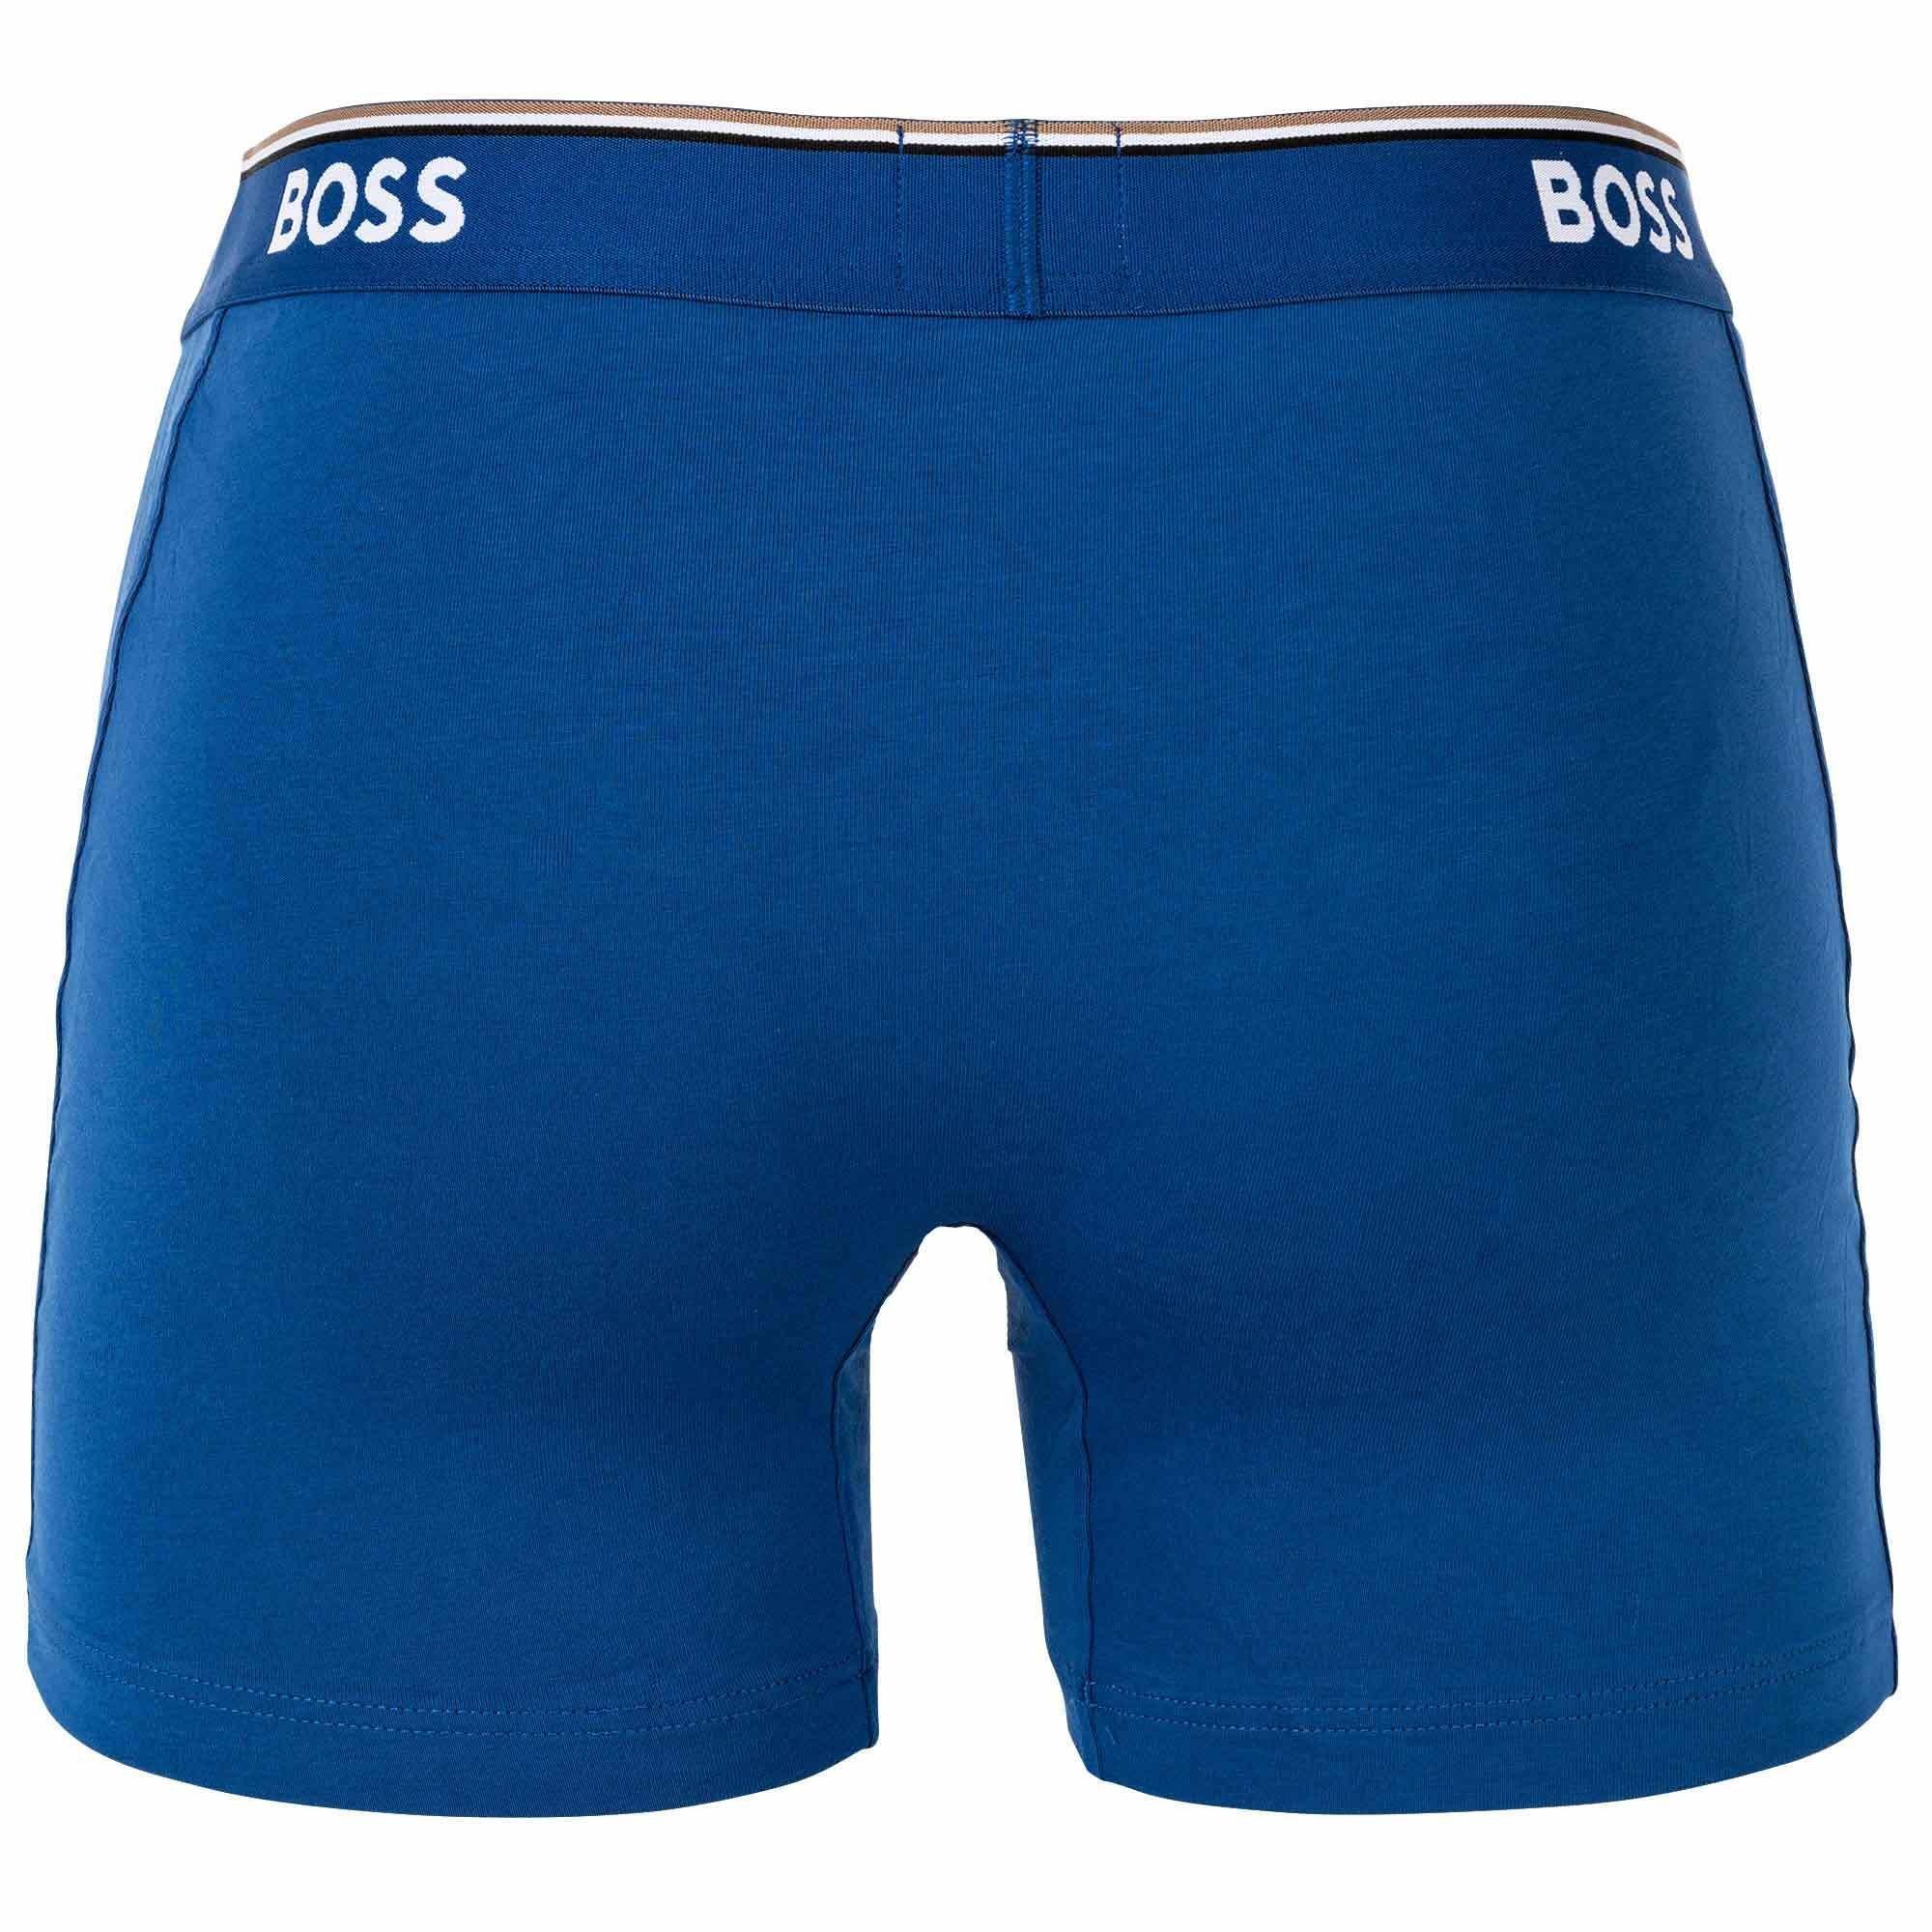 Boxer Herren BOSS Blau 6er Boxershorts, Pack - Boxer Briefs 6P